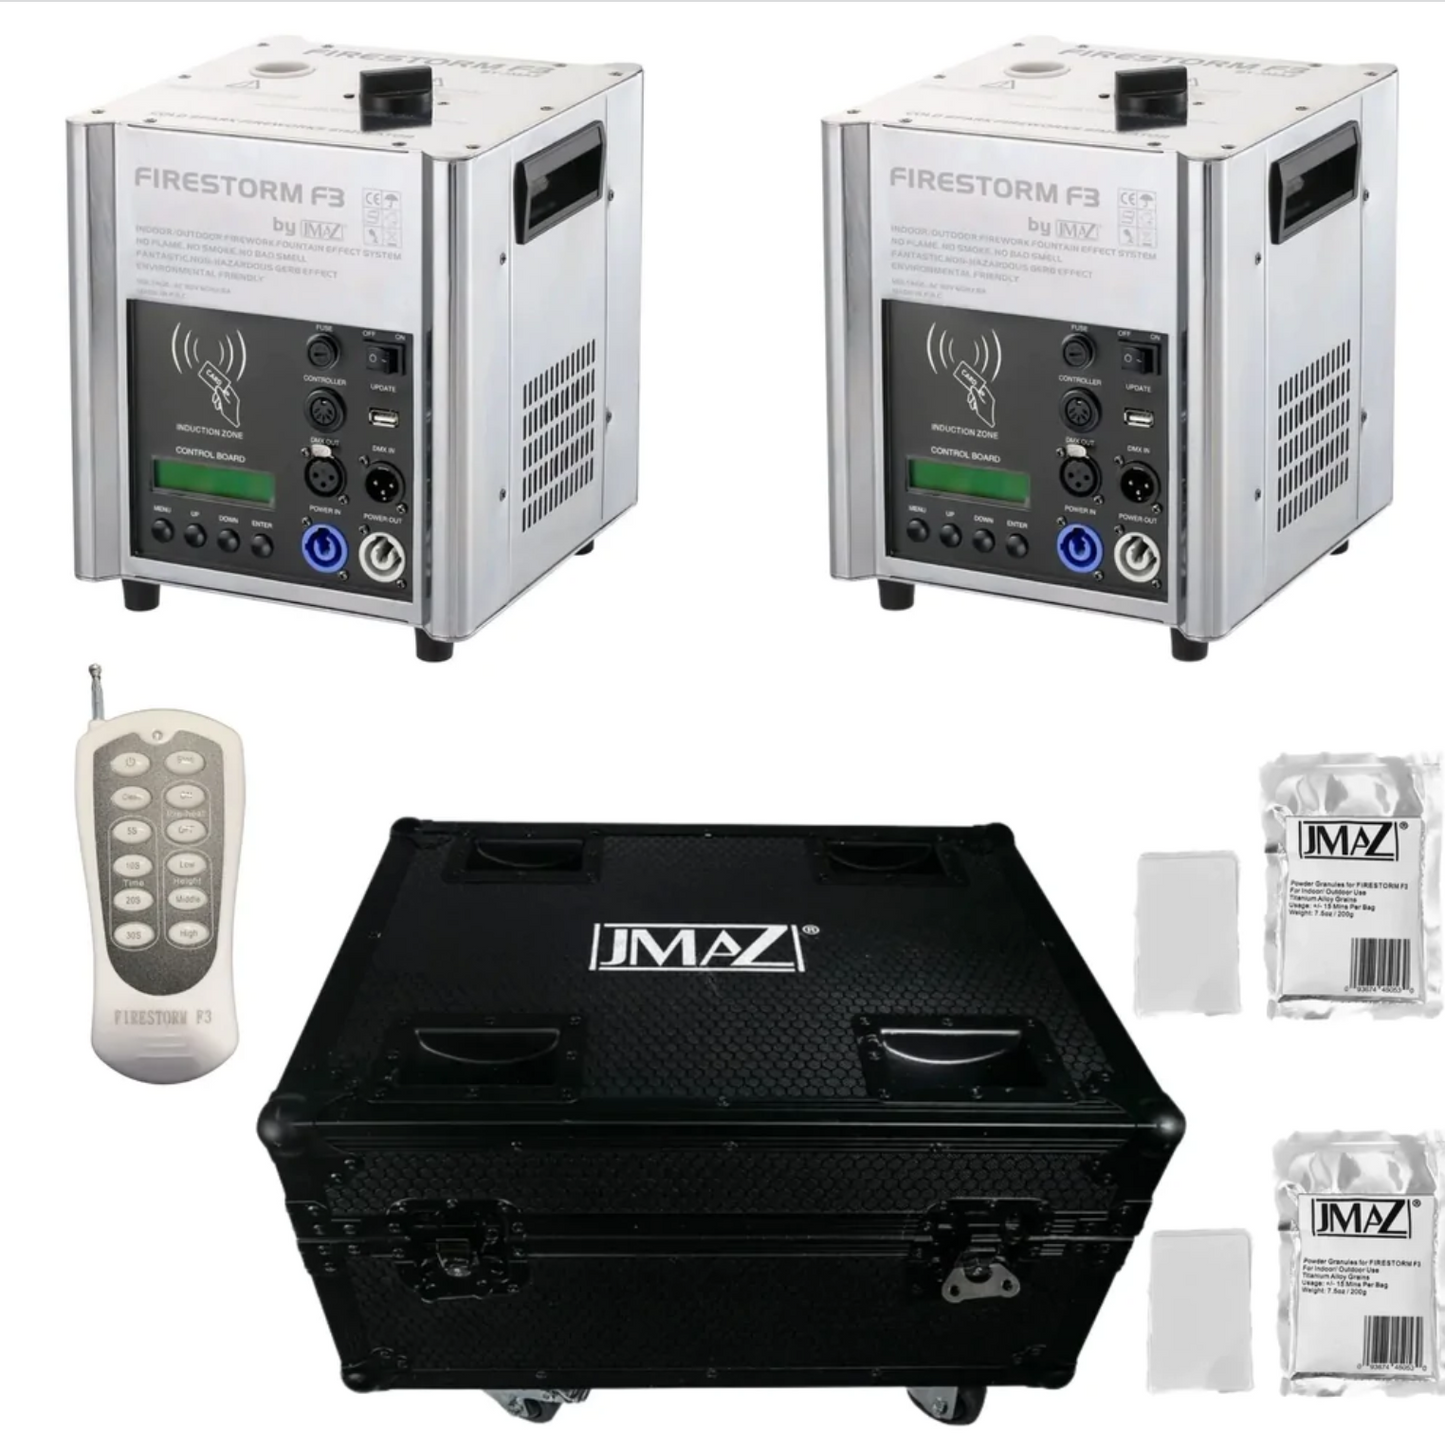 JMaz FireStorm F3 Package - 2x Cold Spark Machines, 2x 200g Powder, 1x Case